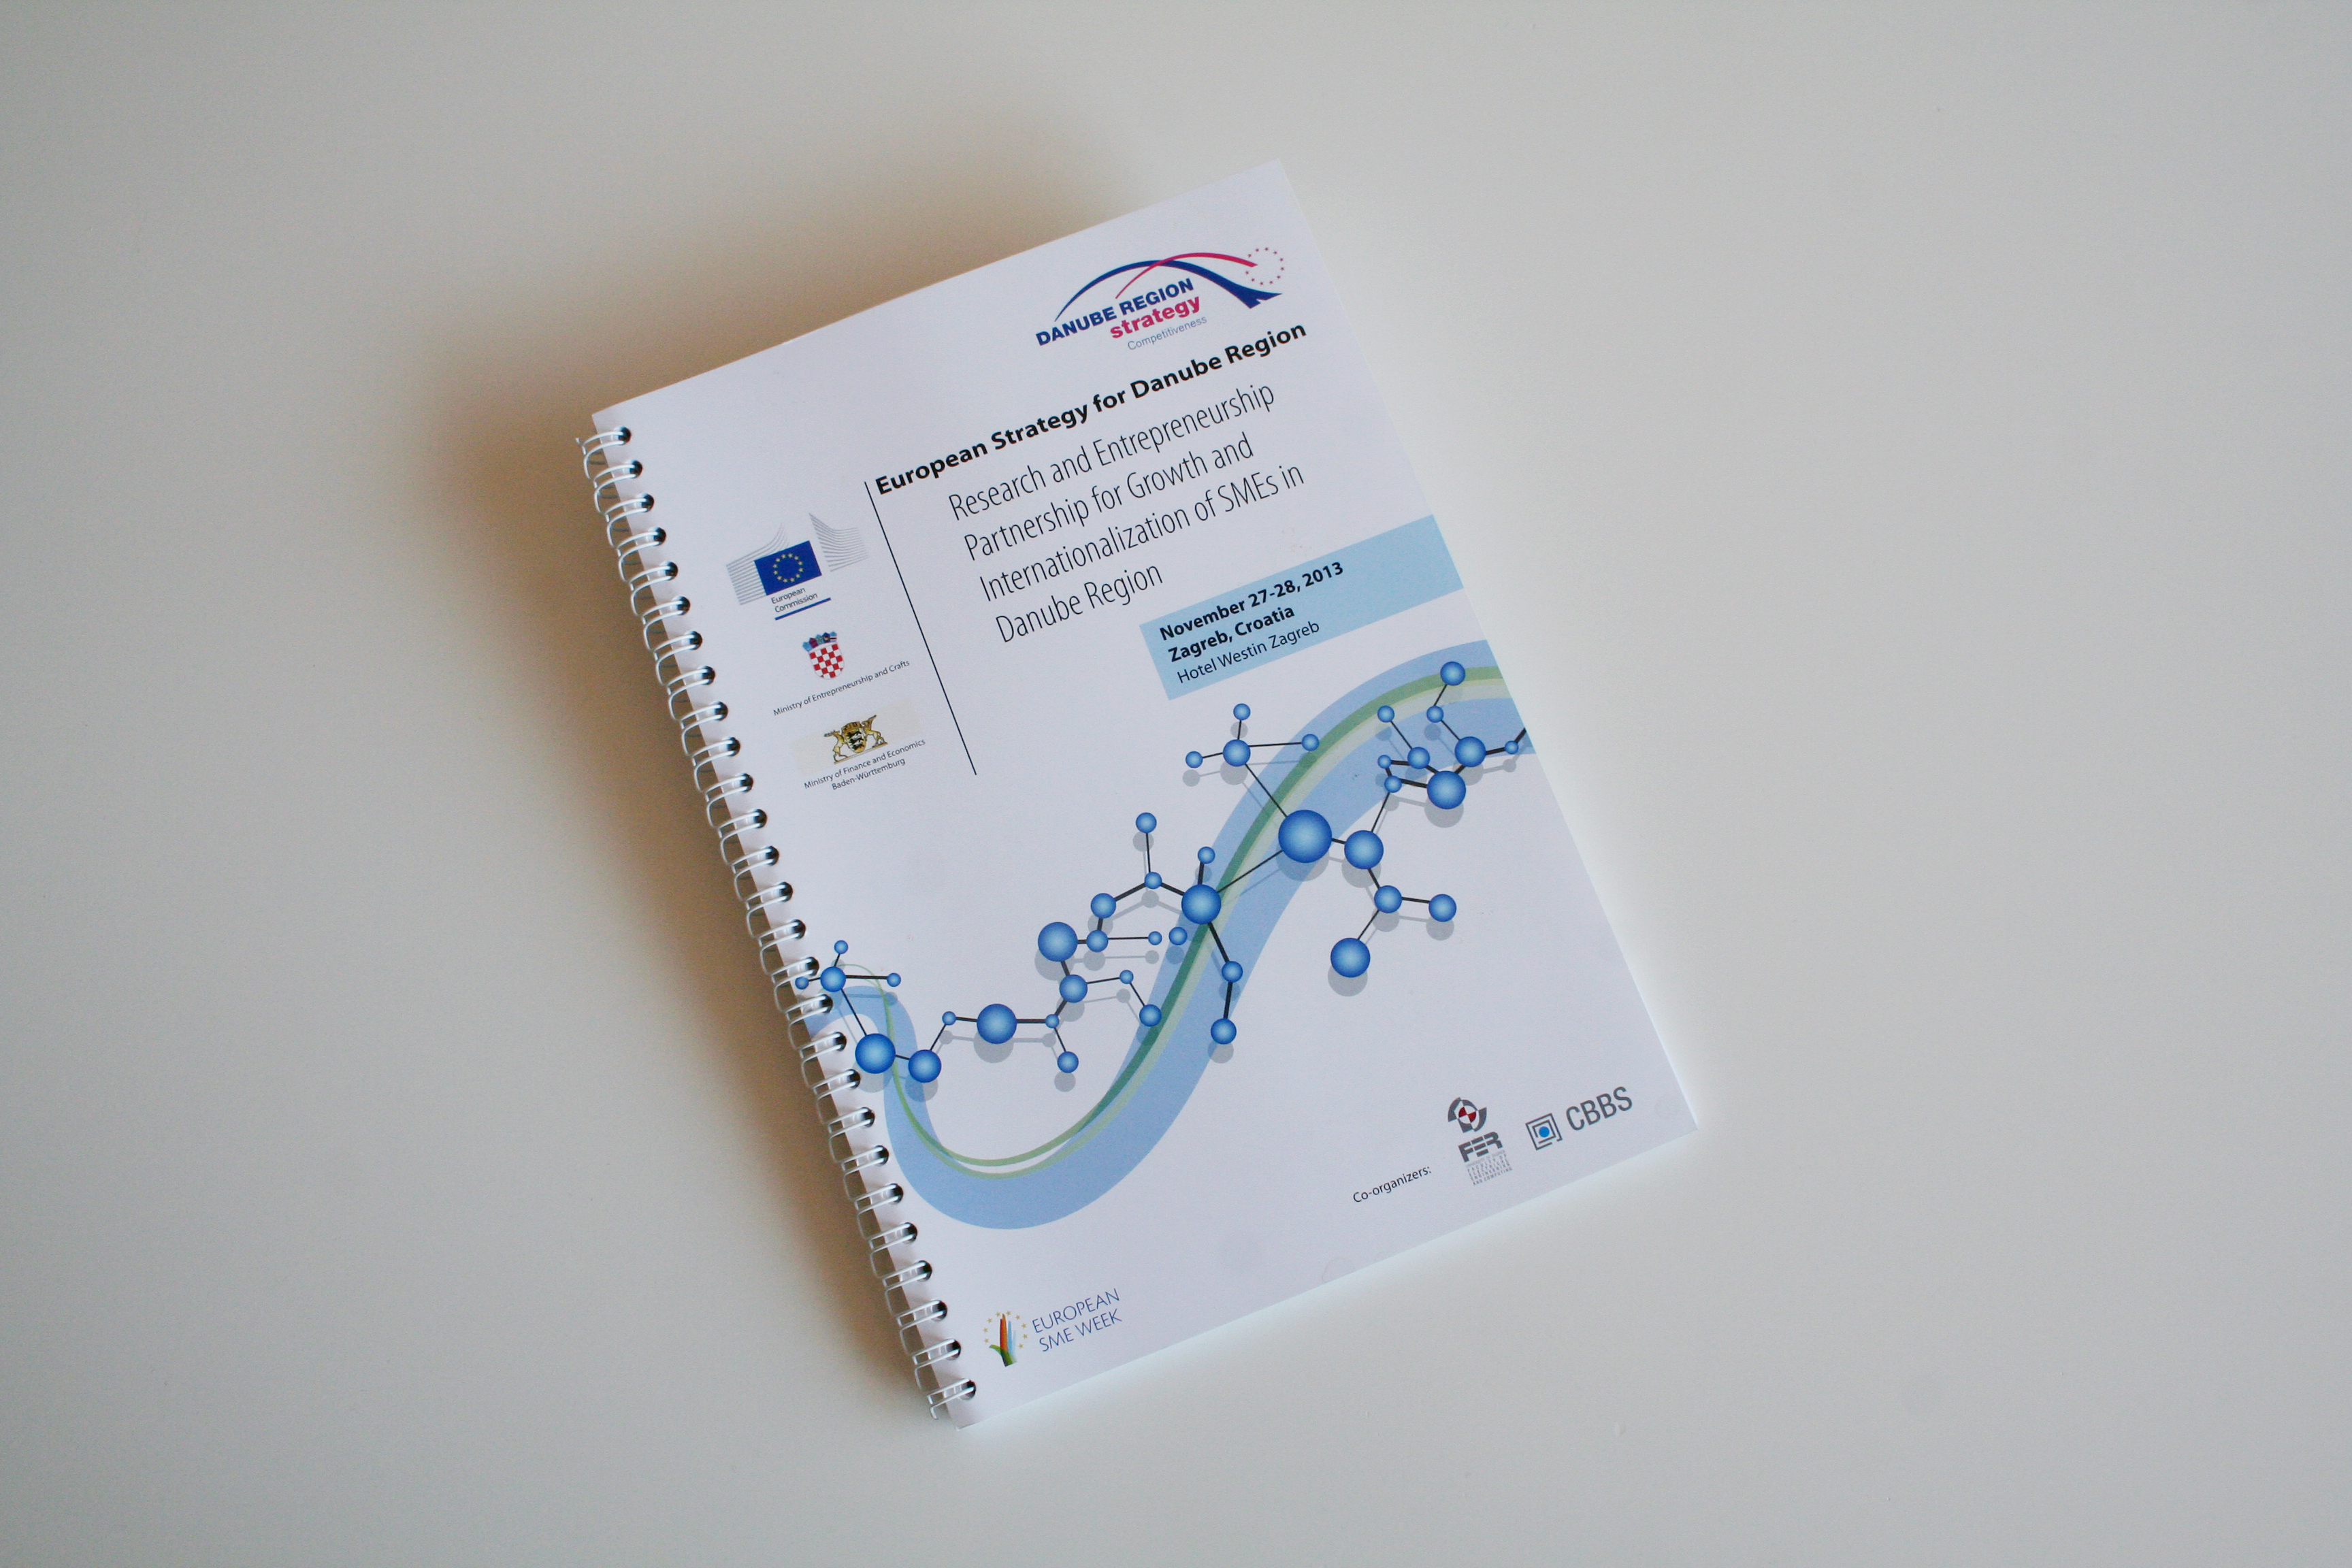 European strategy for Danube region, booklet